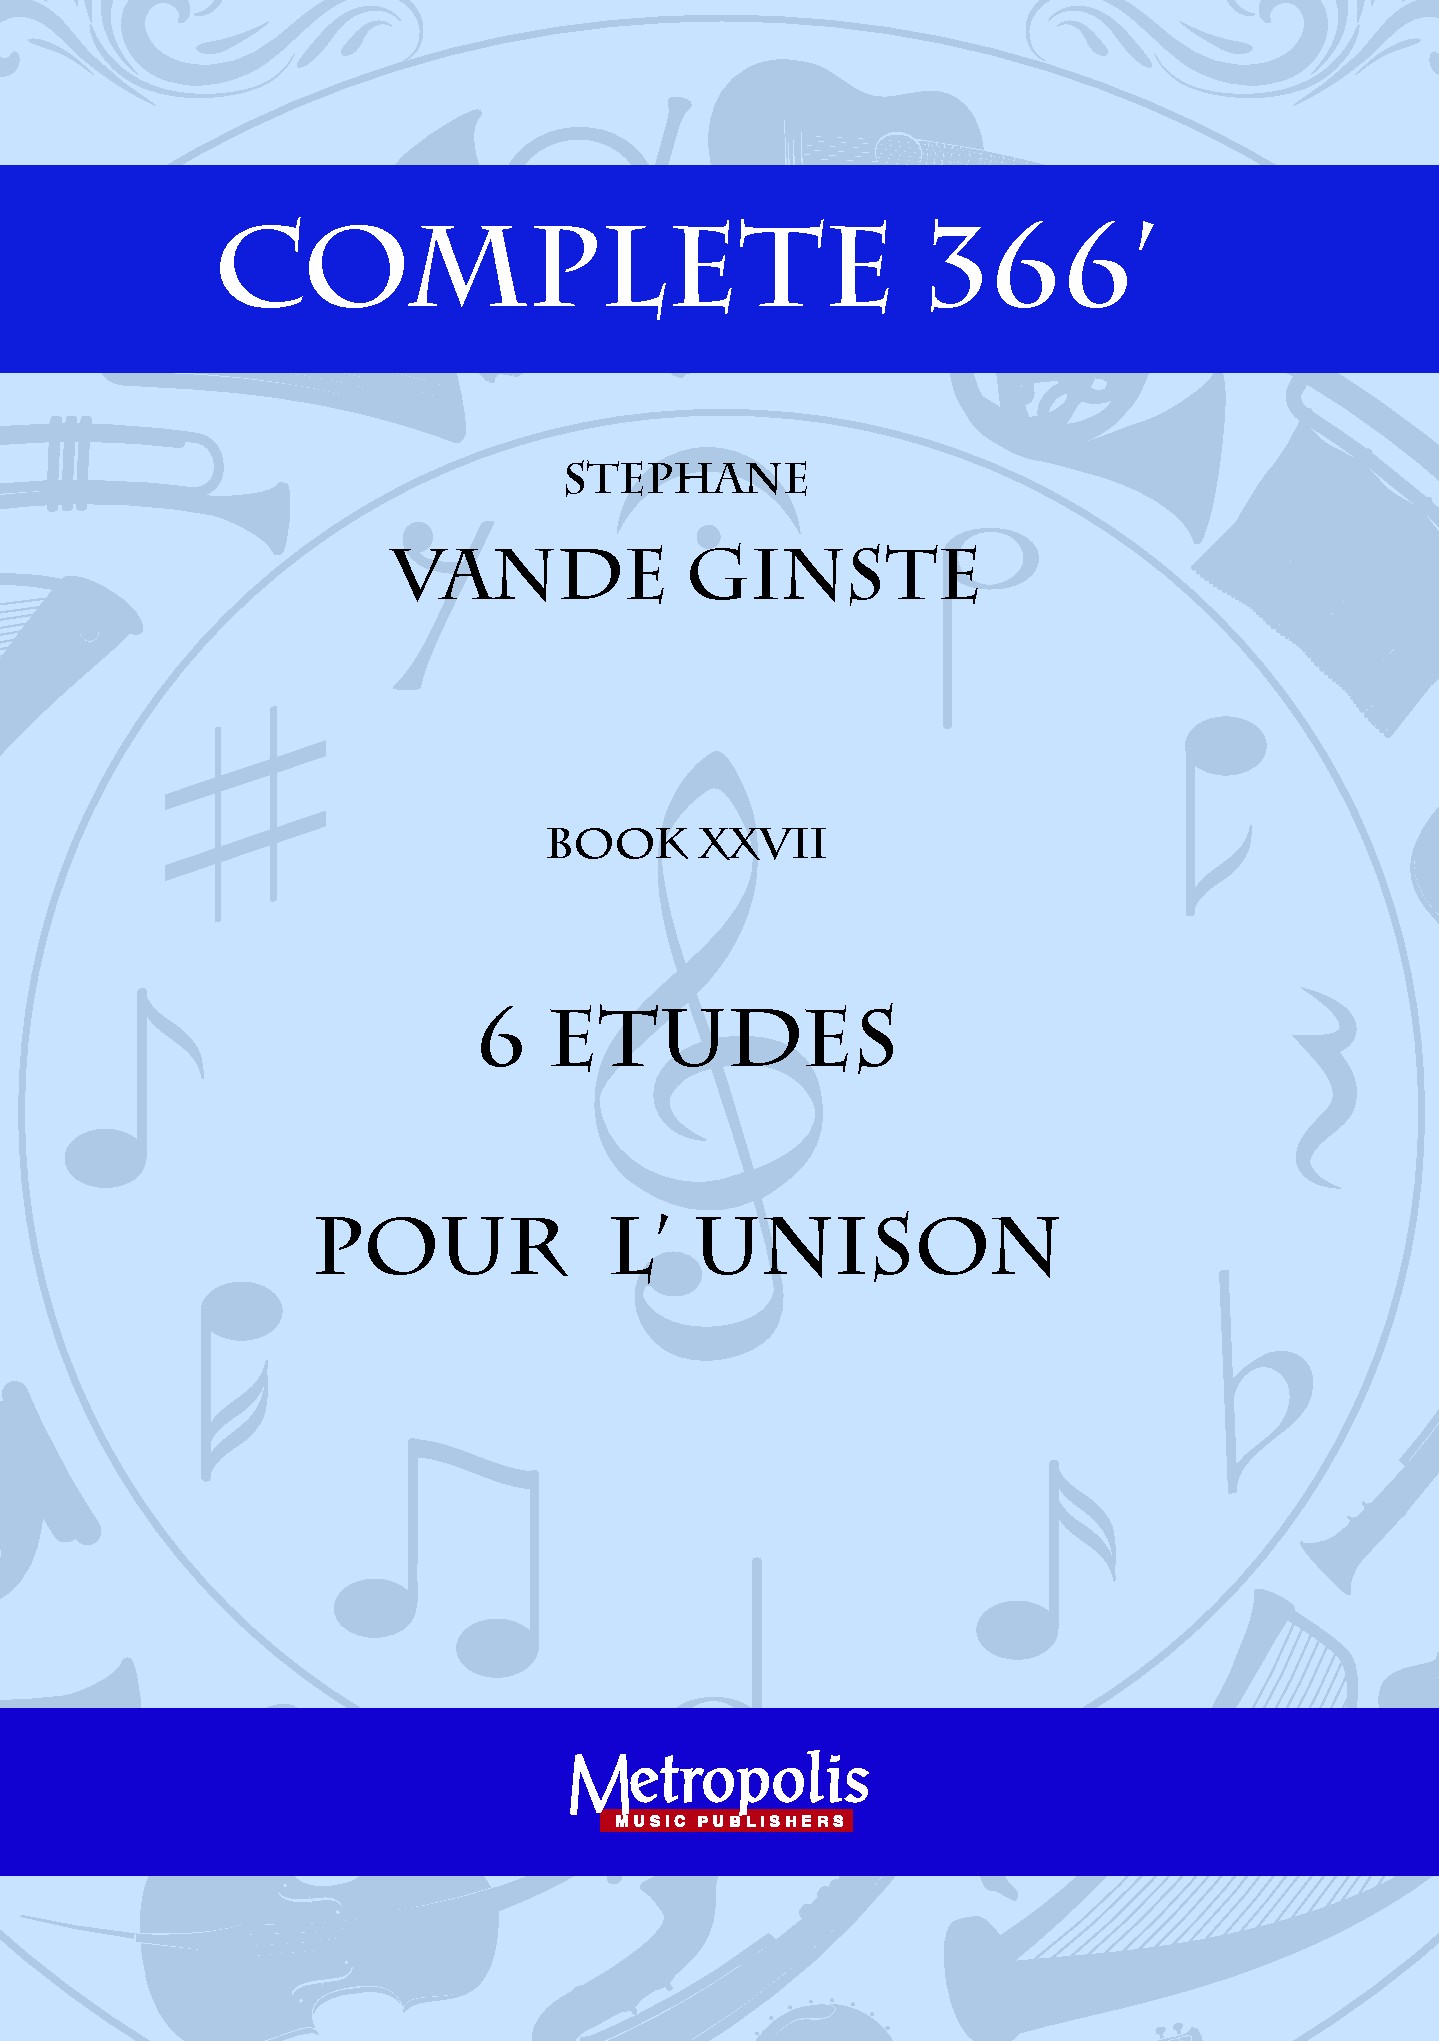 Complete 366' Book Xxii Etudes (VANDE GINSTE STEPHANE)